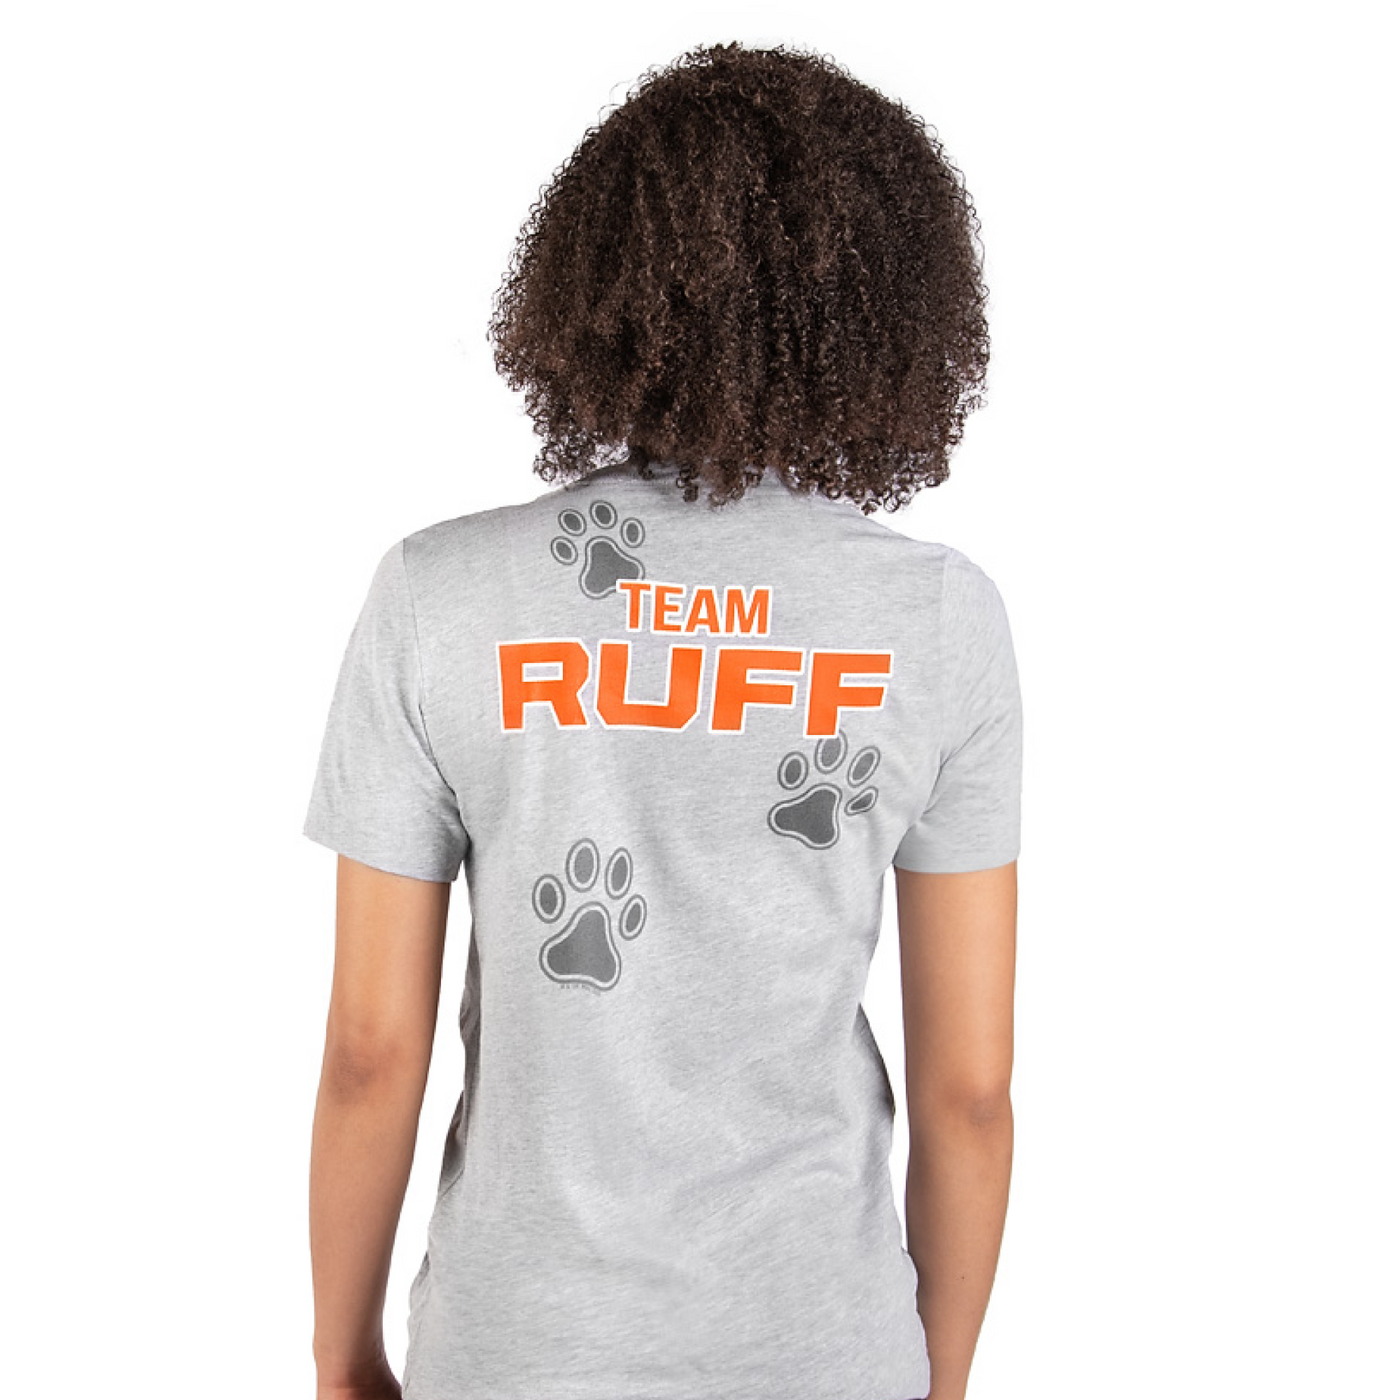 Animal Planet’s Puppy Bowl Team Ruff T-shirt